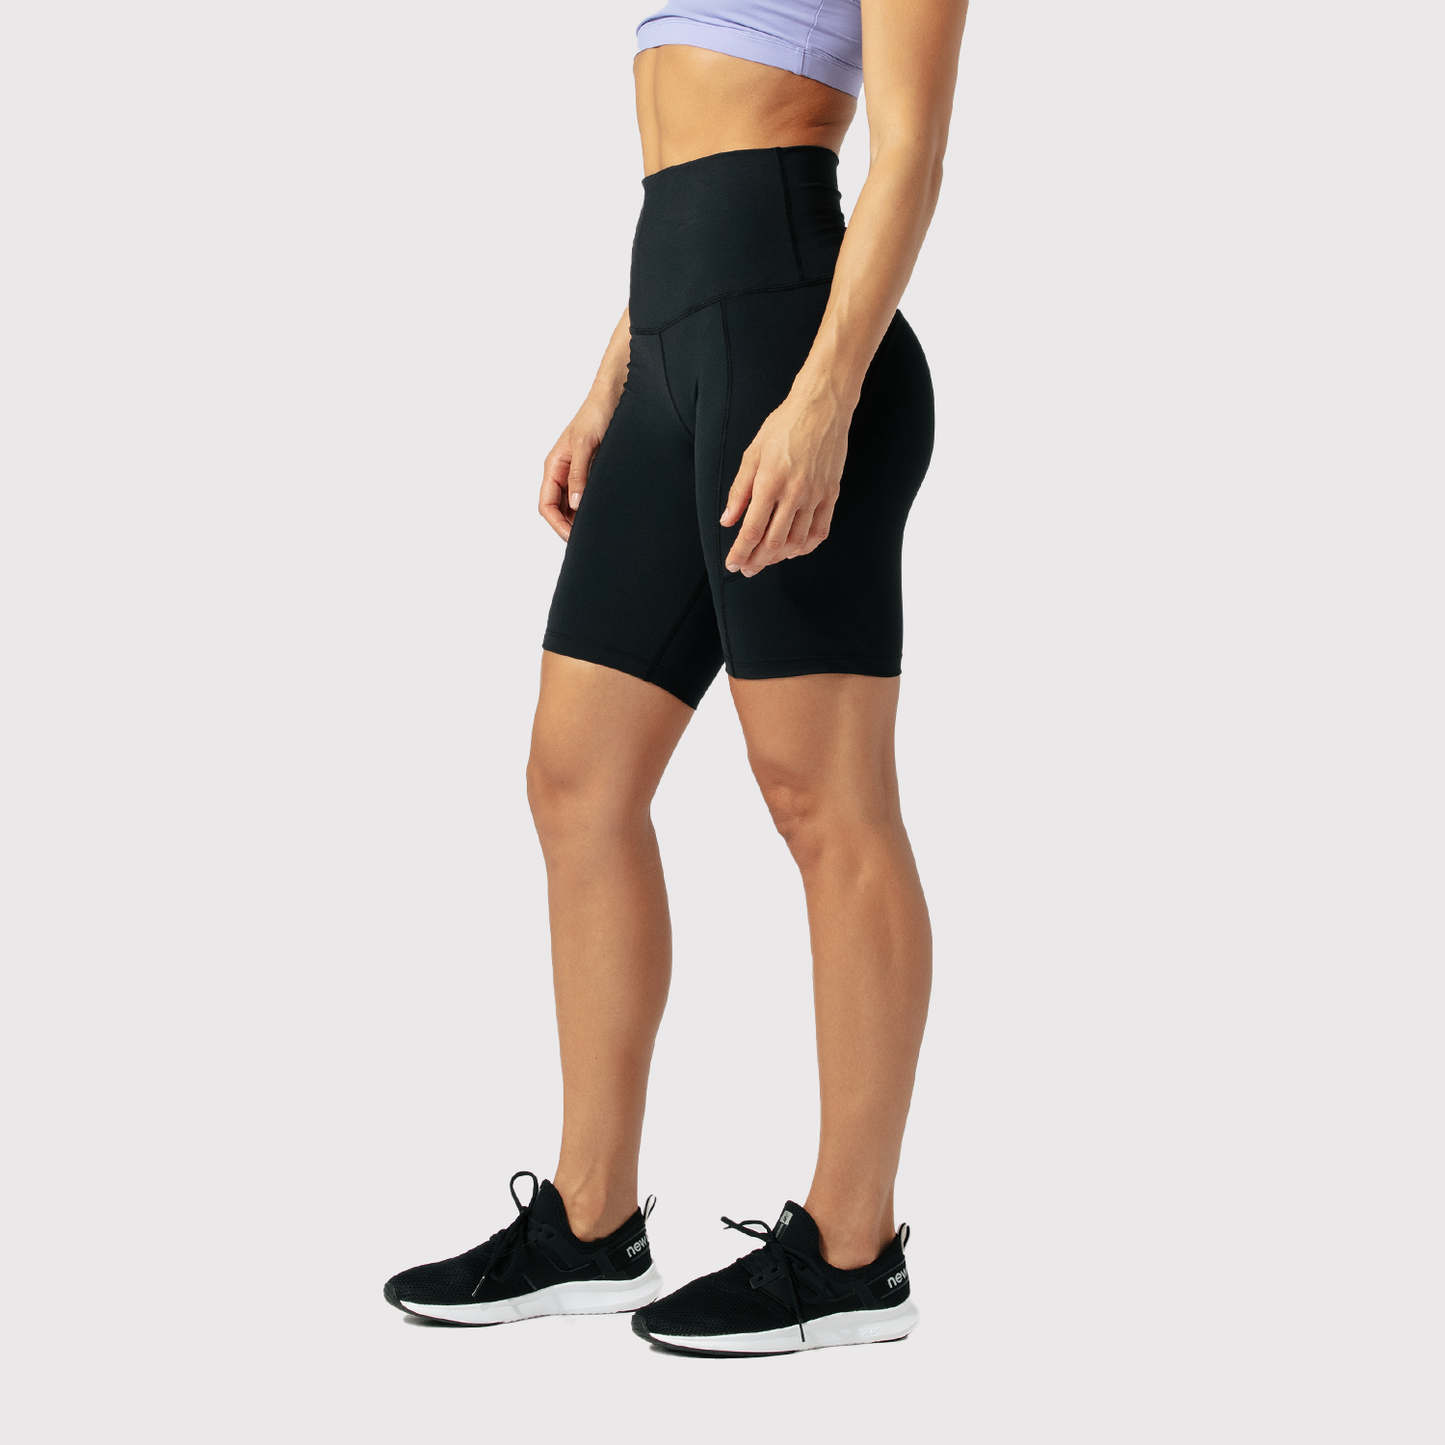 4 Inch Compression Short  Compression shorts, Gym shorts womens, Adidas  bottoms